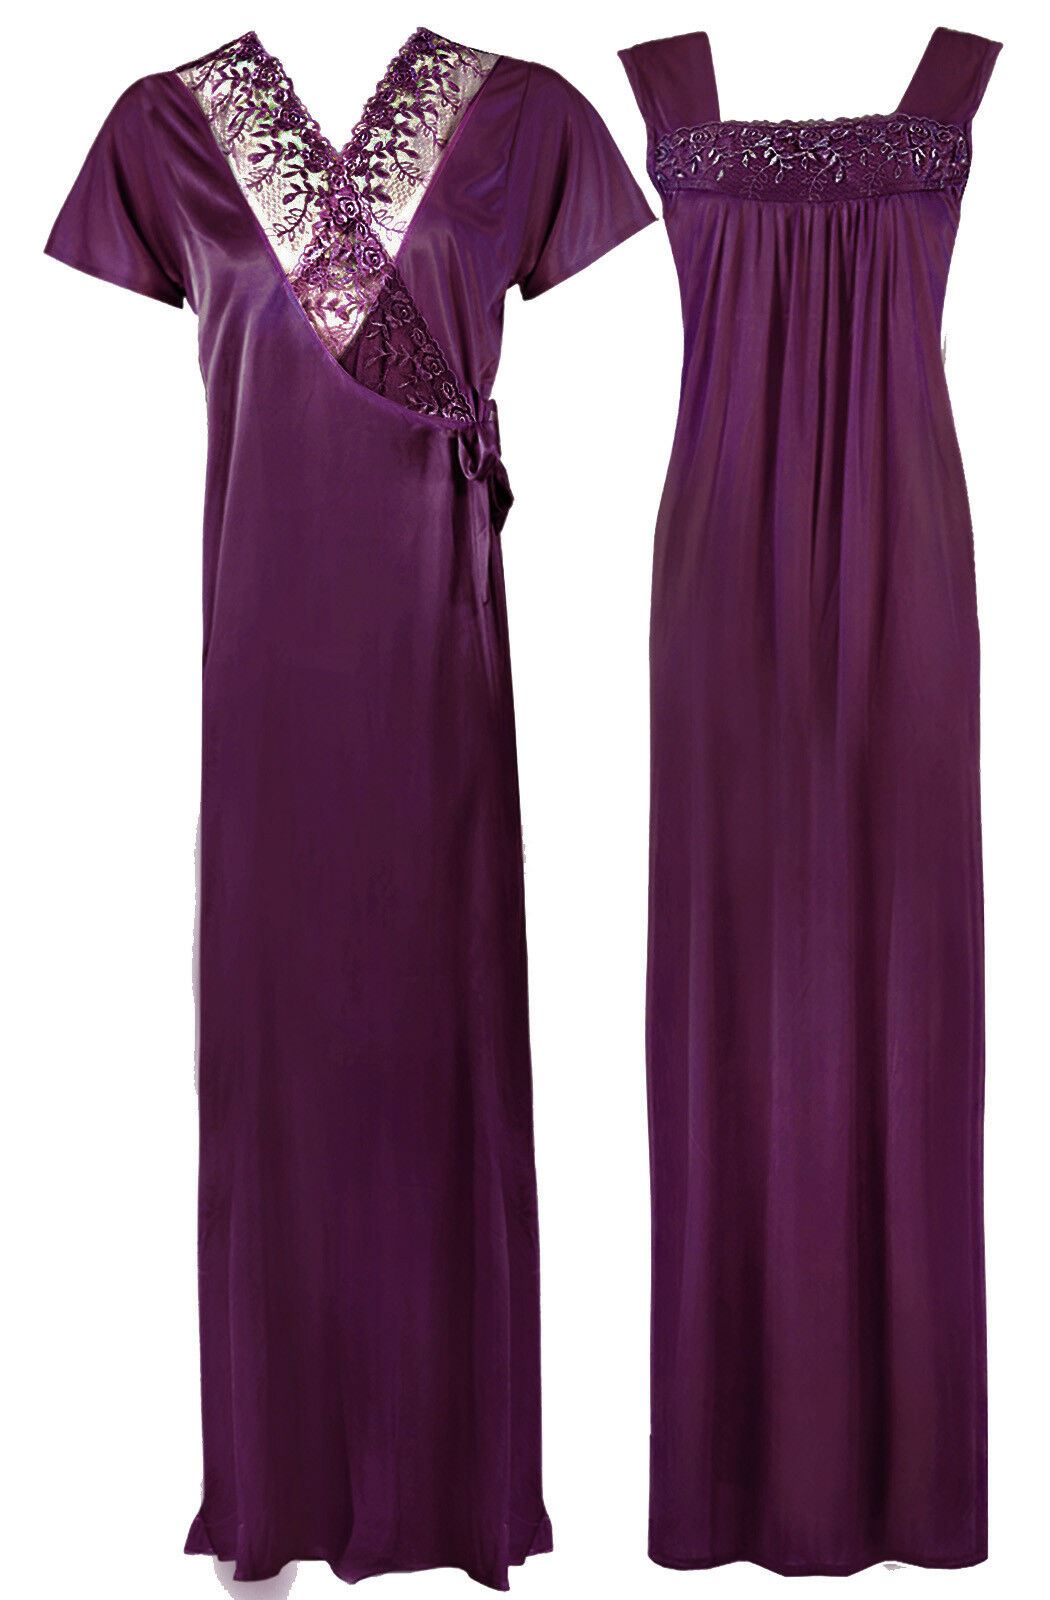 Light Purple / One Size WOMENS LONG SATIN CHEMISE NIGHTIE NIGHTDRESS LADIES DRESSING GOWN 2PC SET 8-16 The Orange Tags